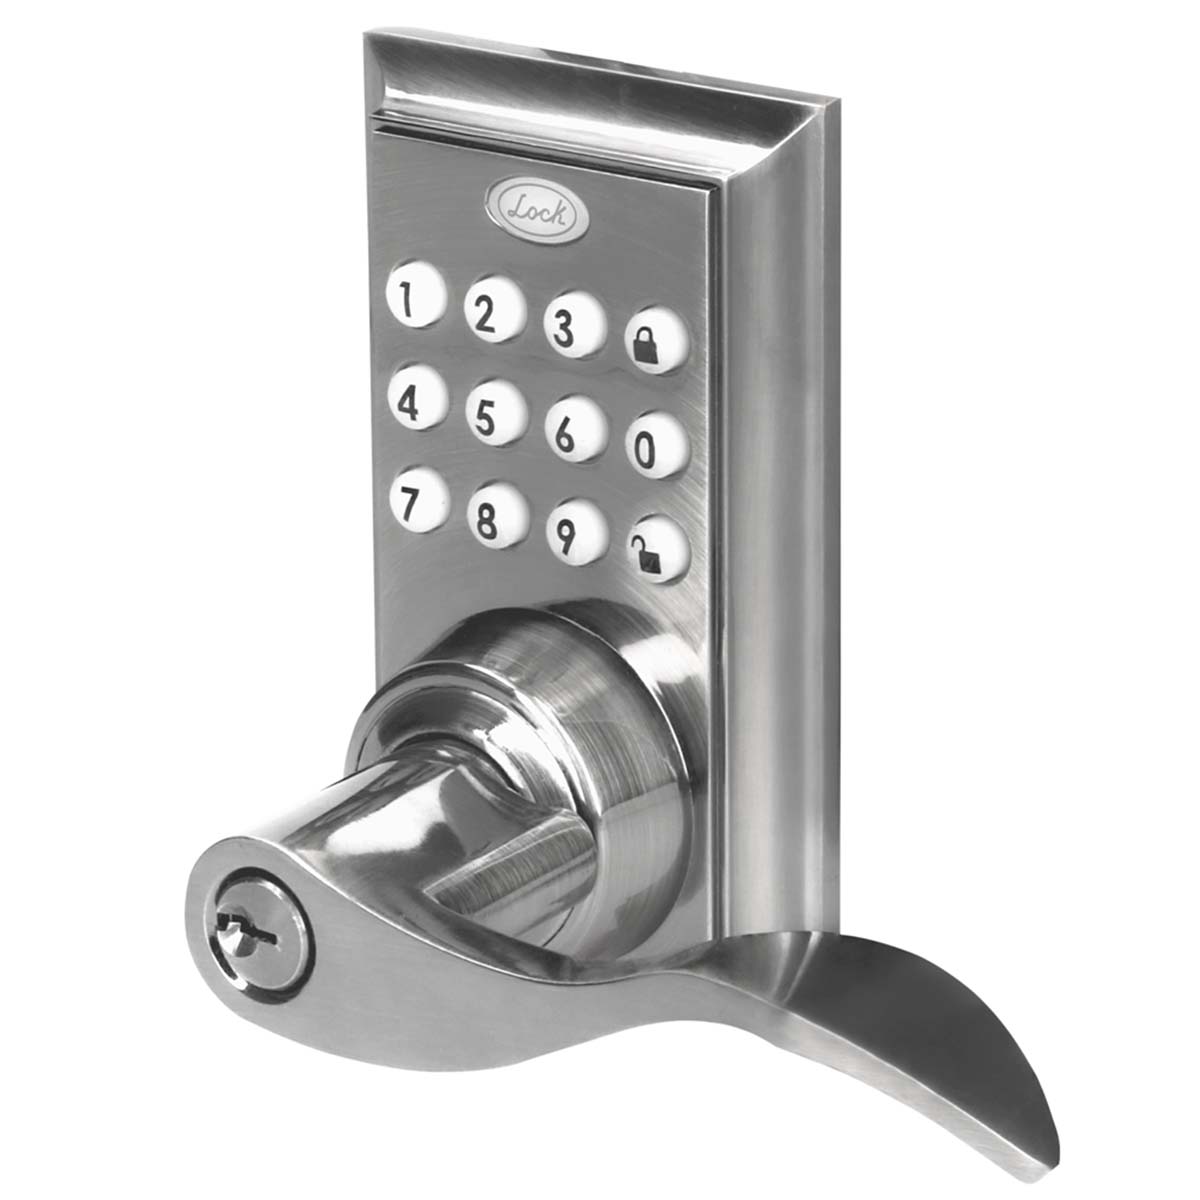 Cerradura Digital Botones Manija Chapa Puerta Recamara Lock